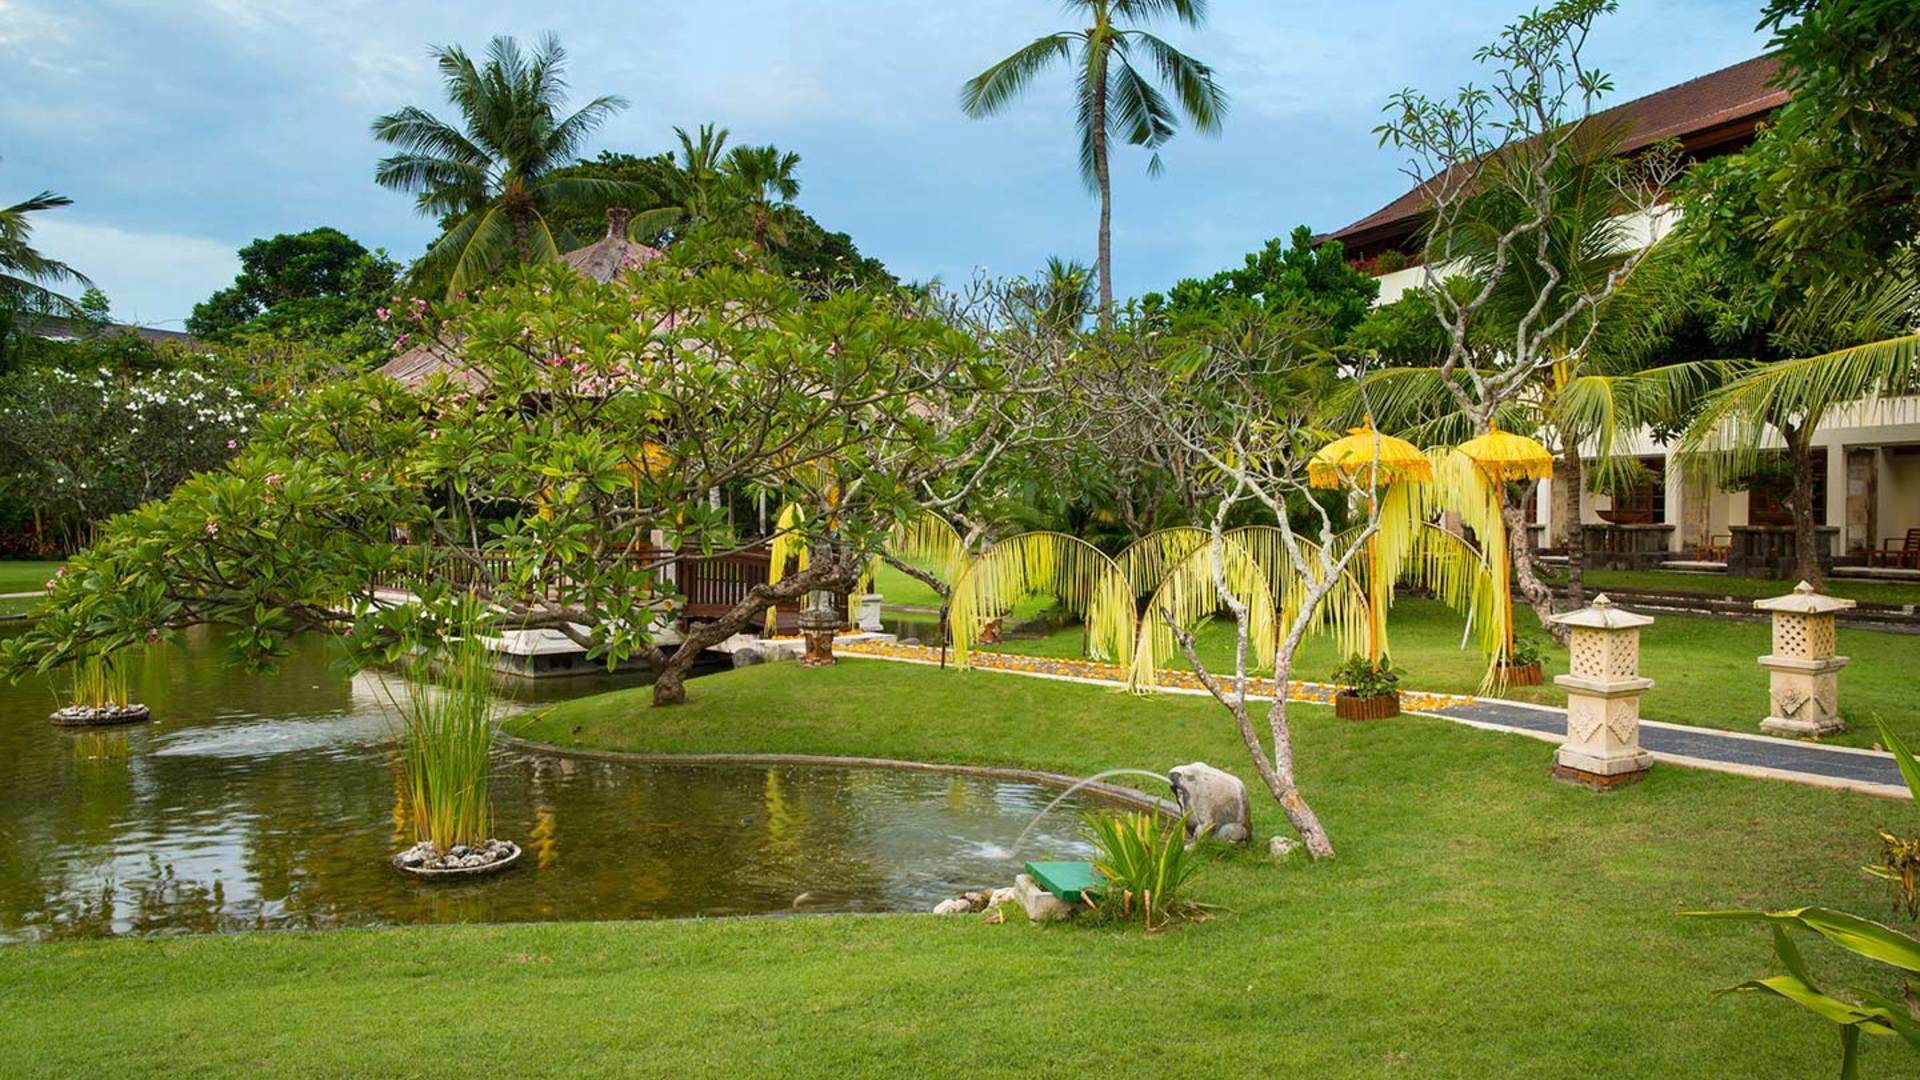 Nusa dua beach hotel & spa 5* - индонезия, бали - отели | пегас туристик